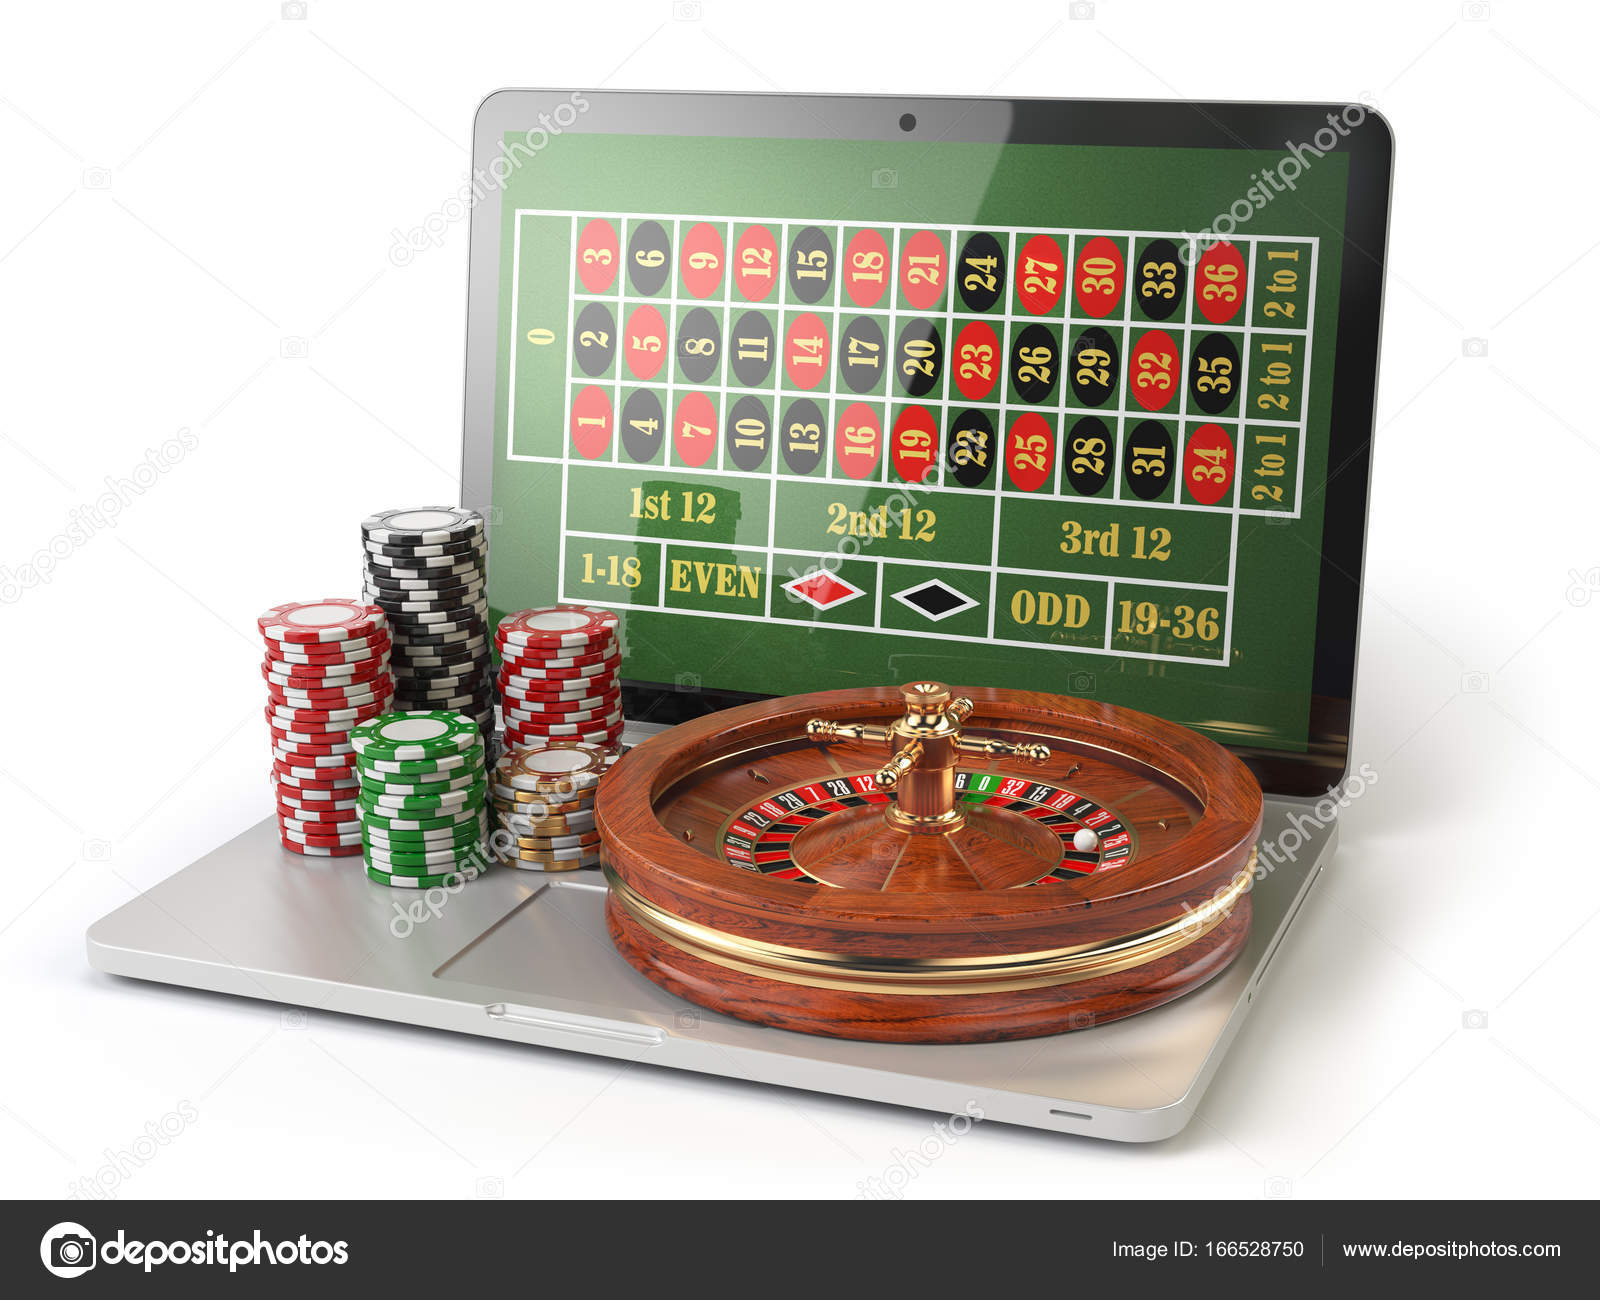 As melhores slot machines de bitcoin para jogar no casino de bitcoin dos bombeiros